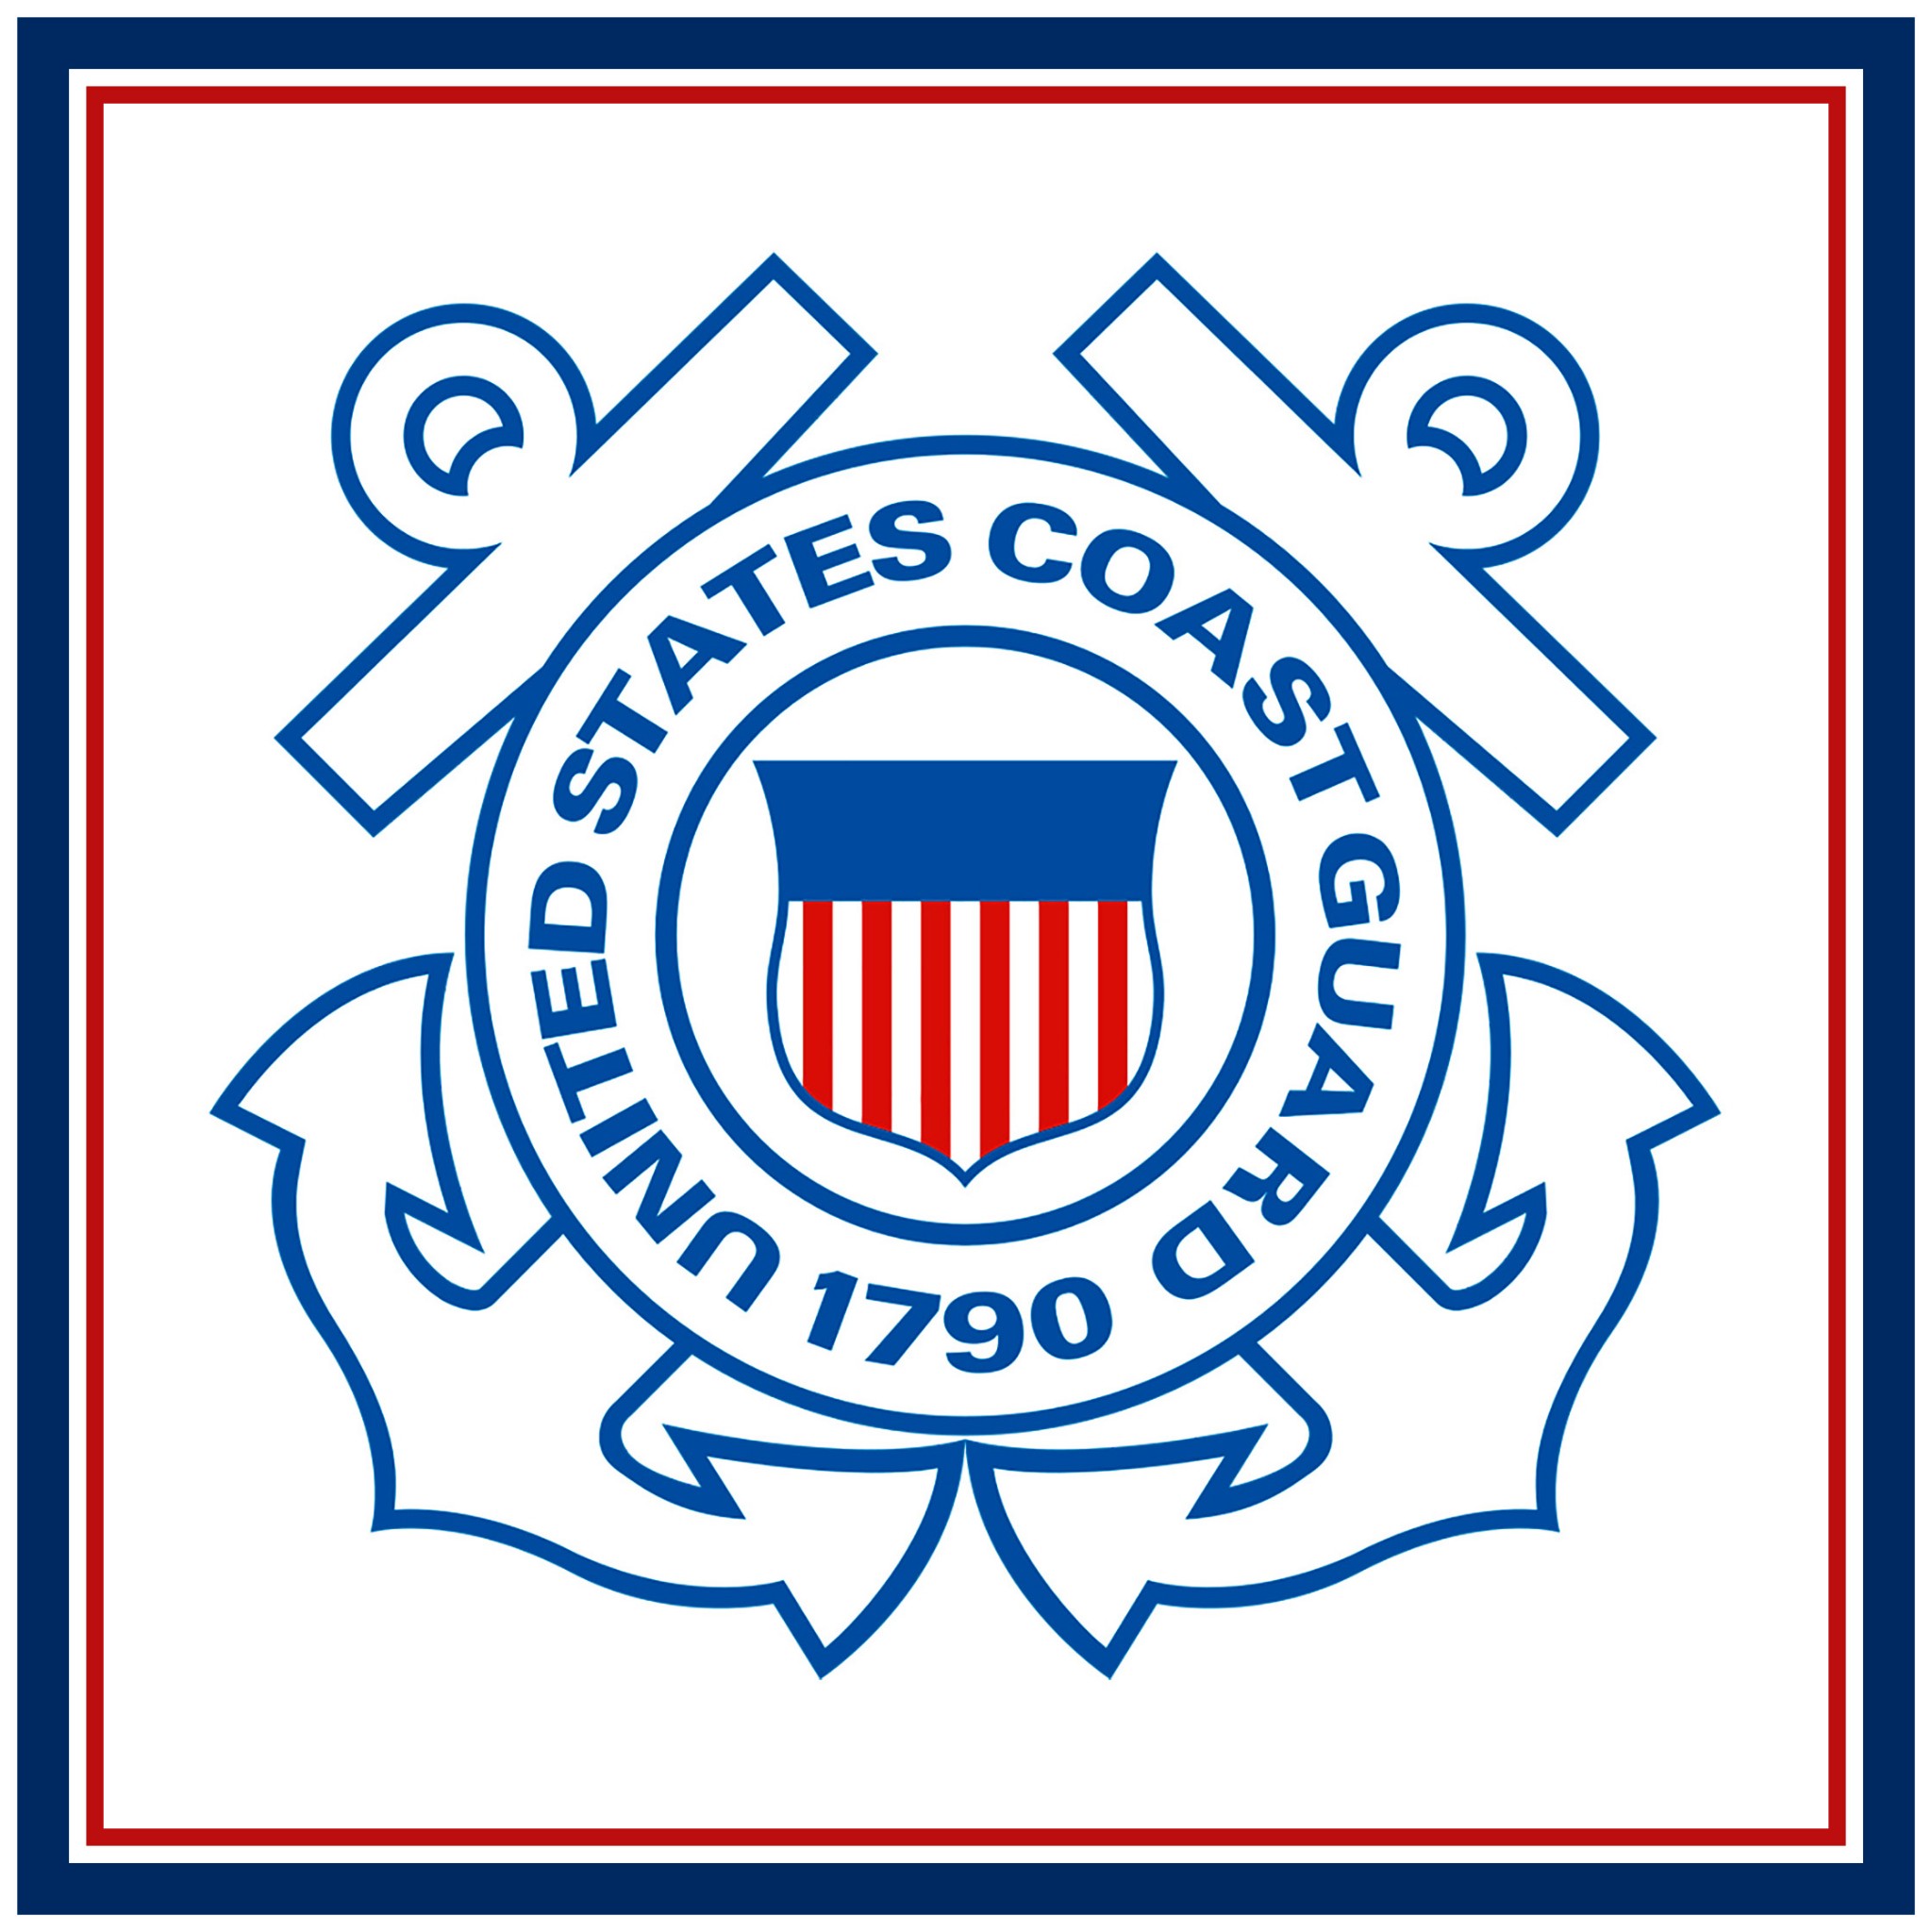 Coast Guard Insignia Chart